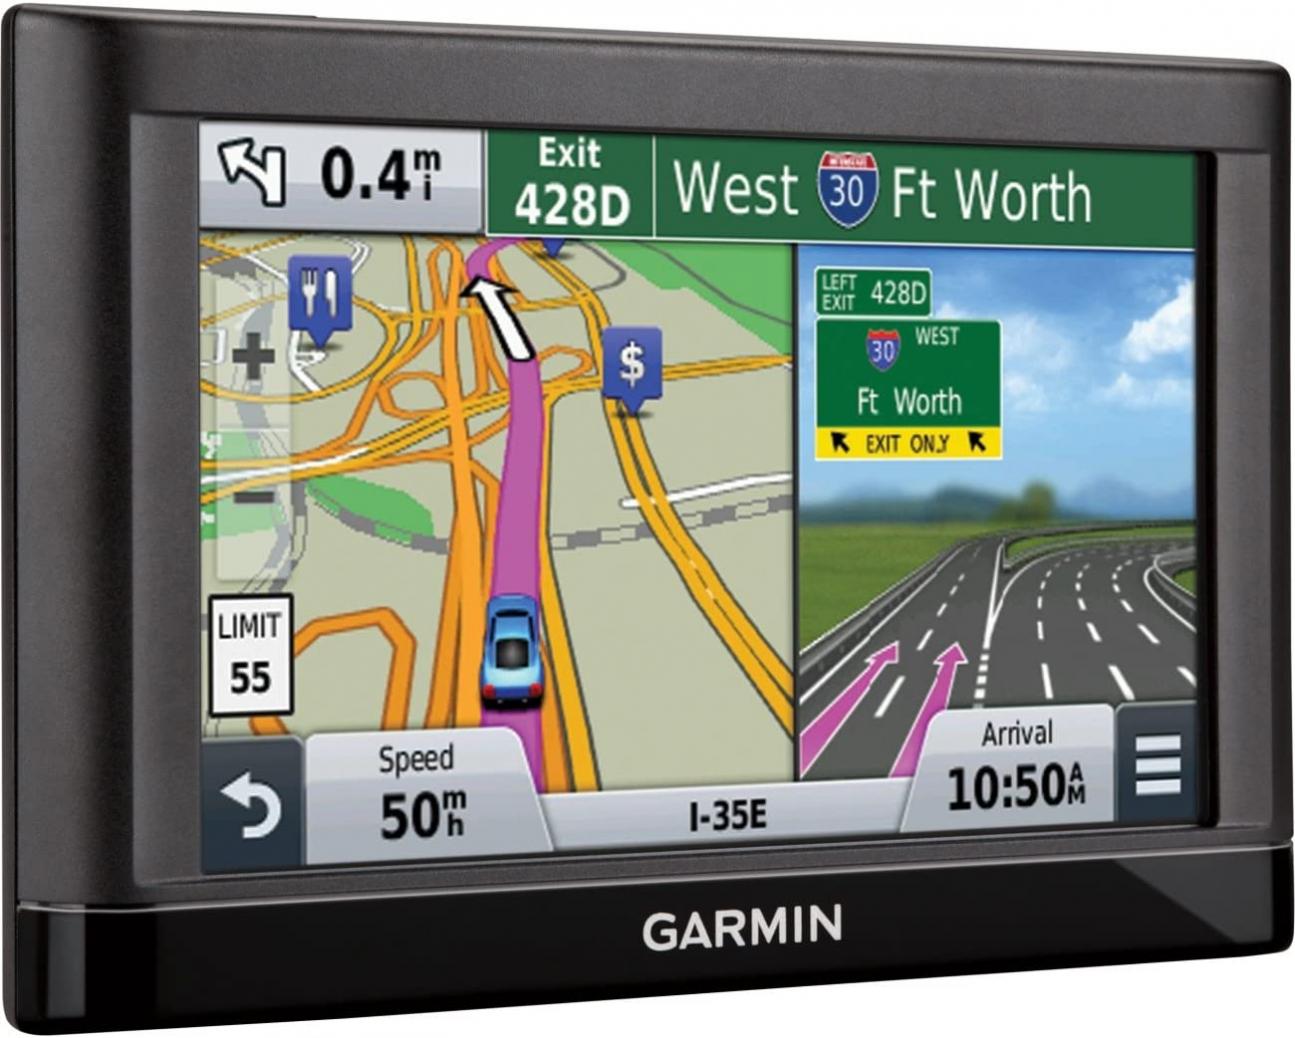 Garmin nvi 55LM GPS Navigators System (Renewed)